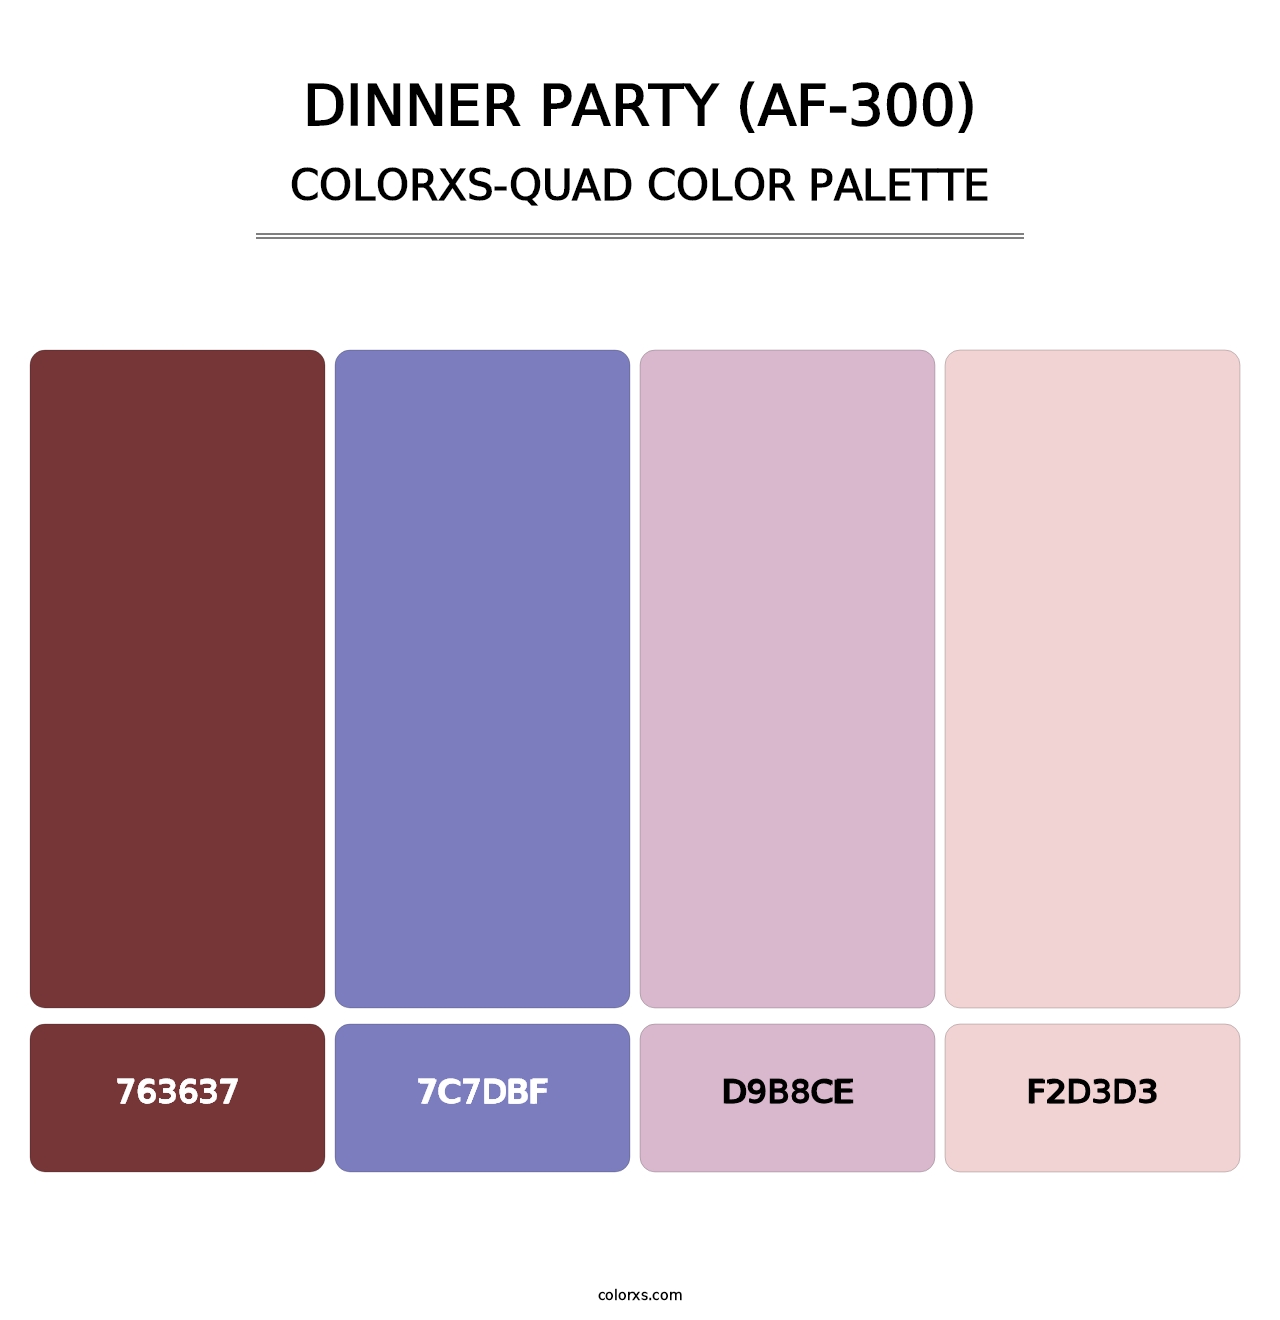 Dinner Party (AF-300) - Colorxs Quad Palette